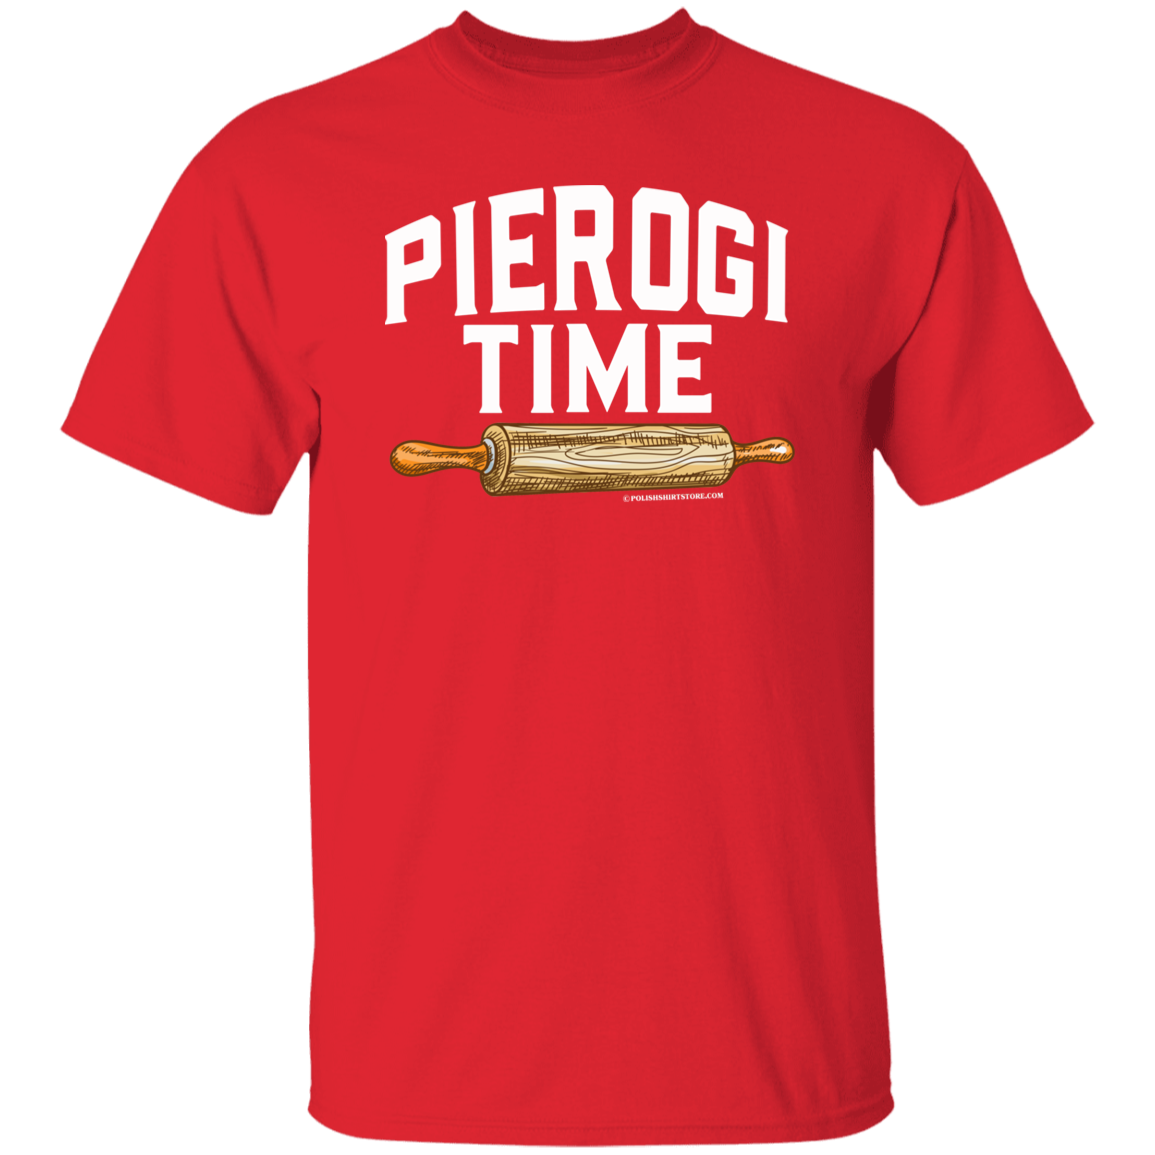 Pierogi Time Apparel CustomCat G500 5.3 oz. T-Shirt Red S